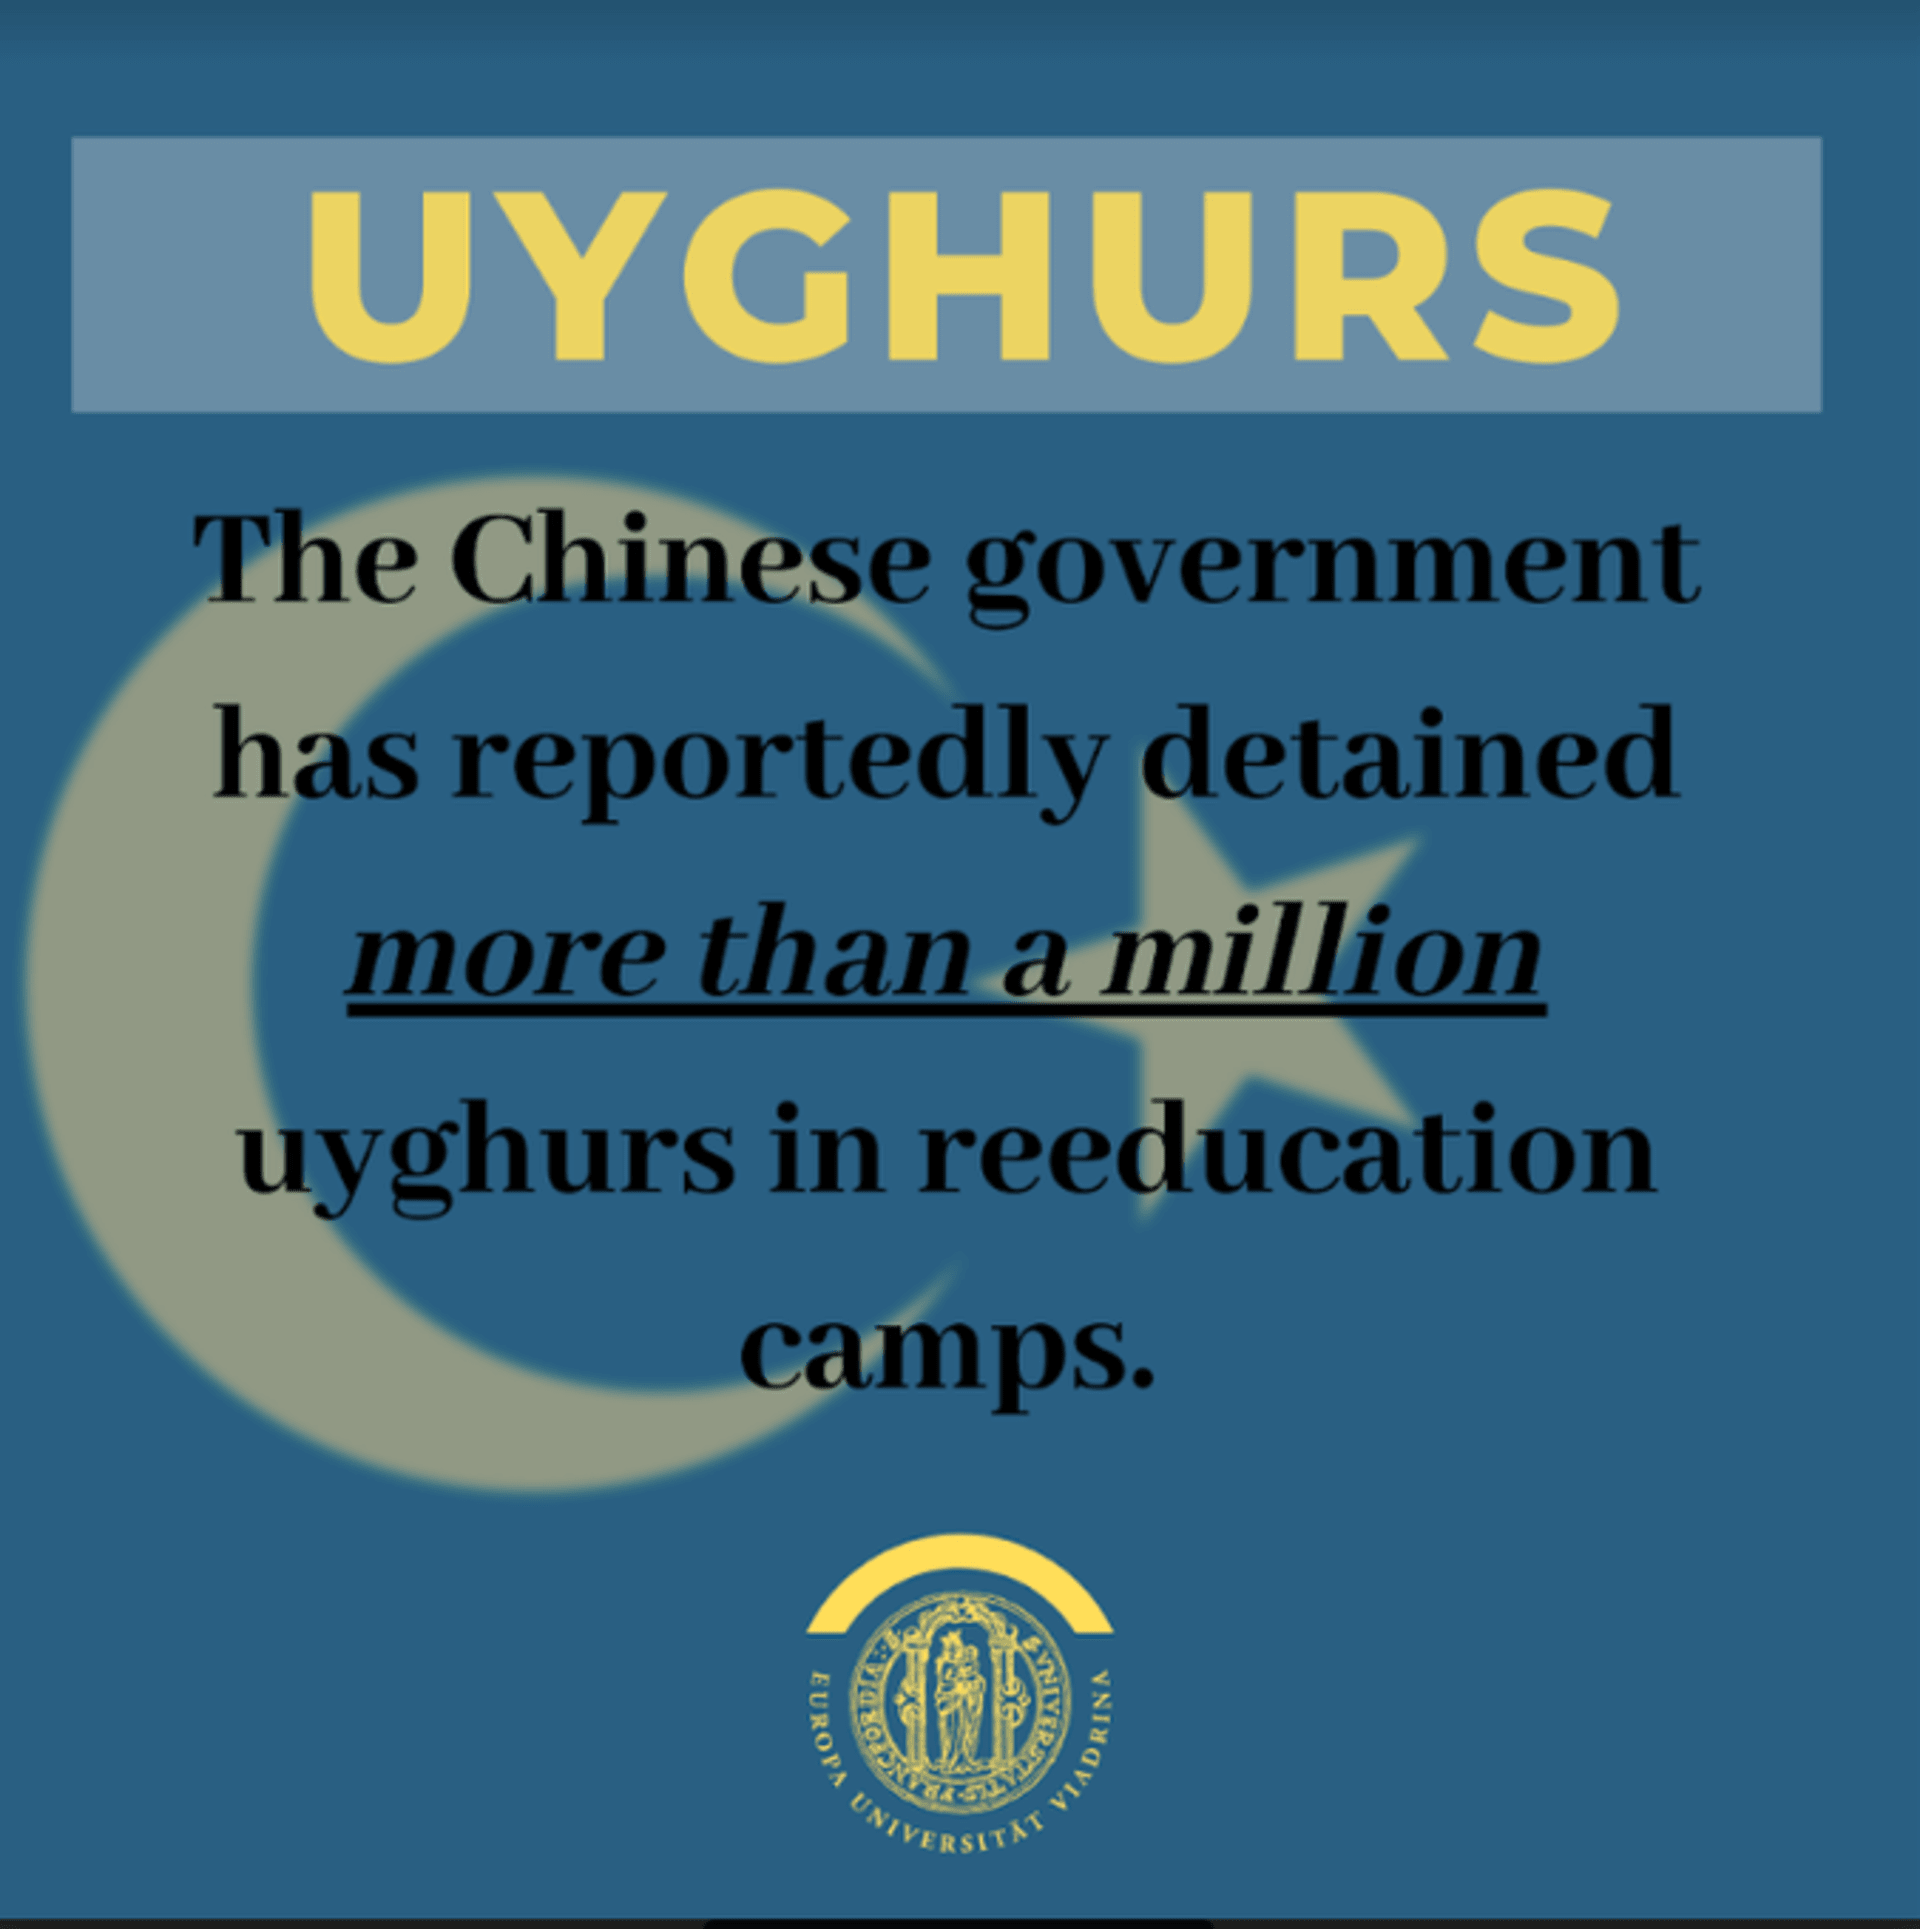 plakát na twitteru Ujgurů